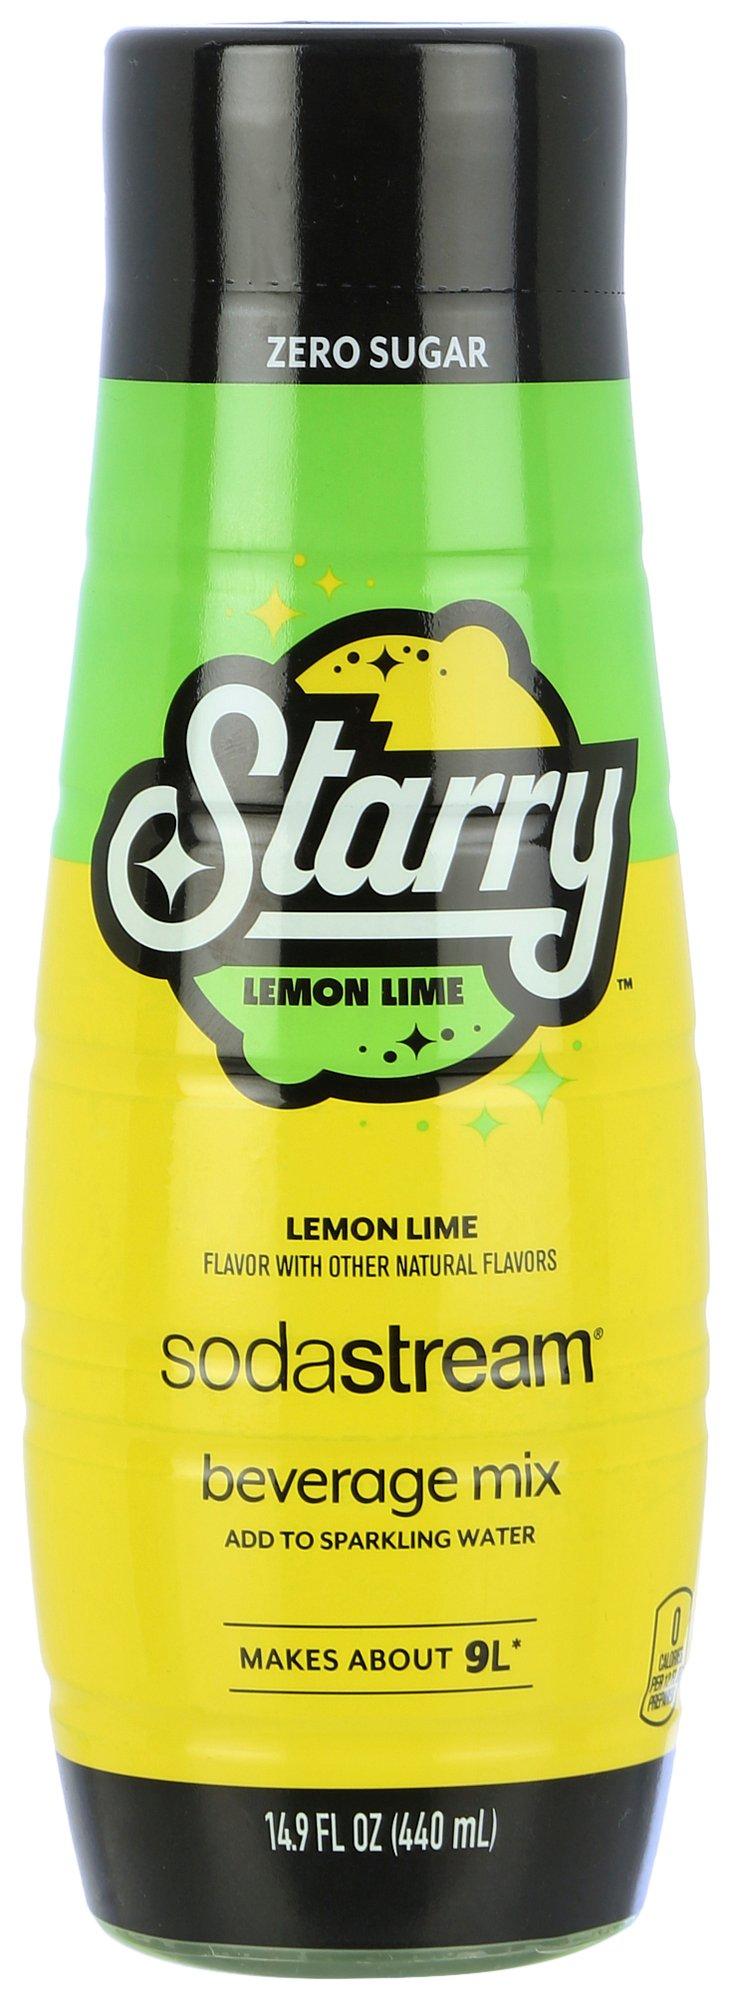 https://images.beallsflorida.com/i/beallsflorida/654-7214-2563-00-yyy/*Starry-Lemon-Lime-Zero-Sugar-Mix*?$product$&fmt=auto&qlt=default